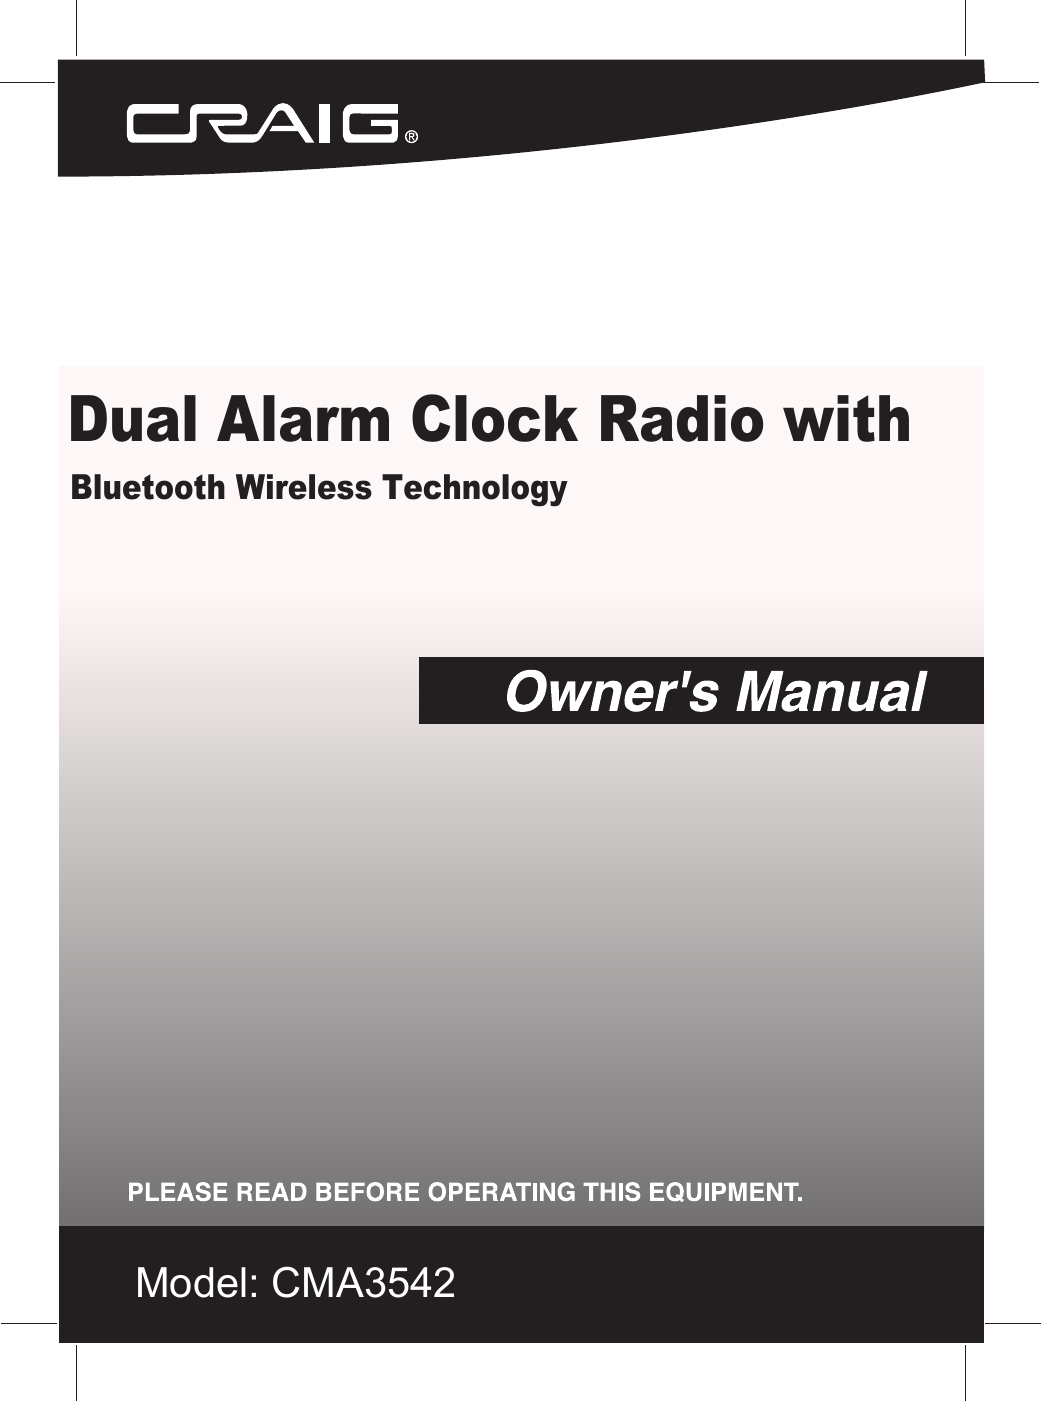 Model: CMA3542Dual Alarm Clock Radio with Bluetooth Wireless Technology